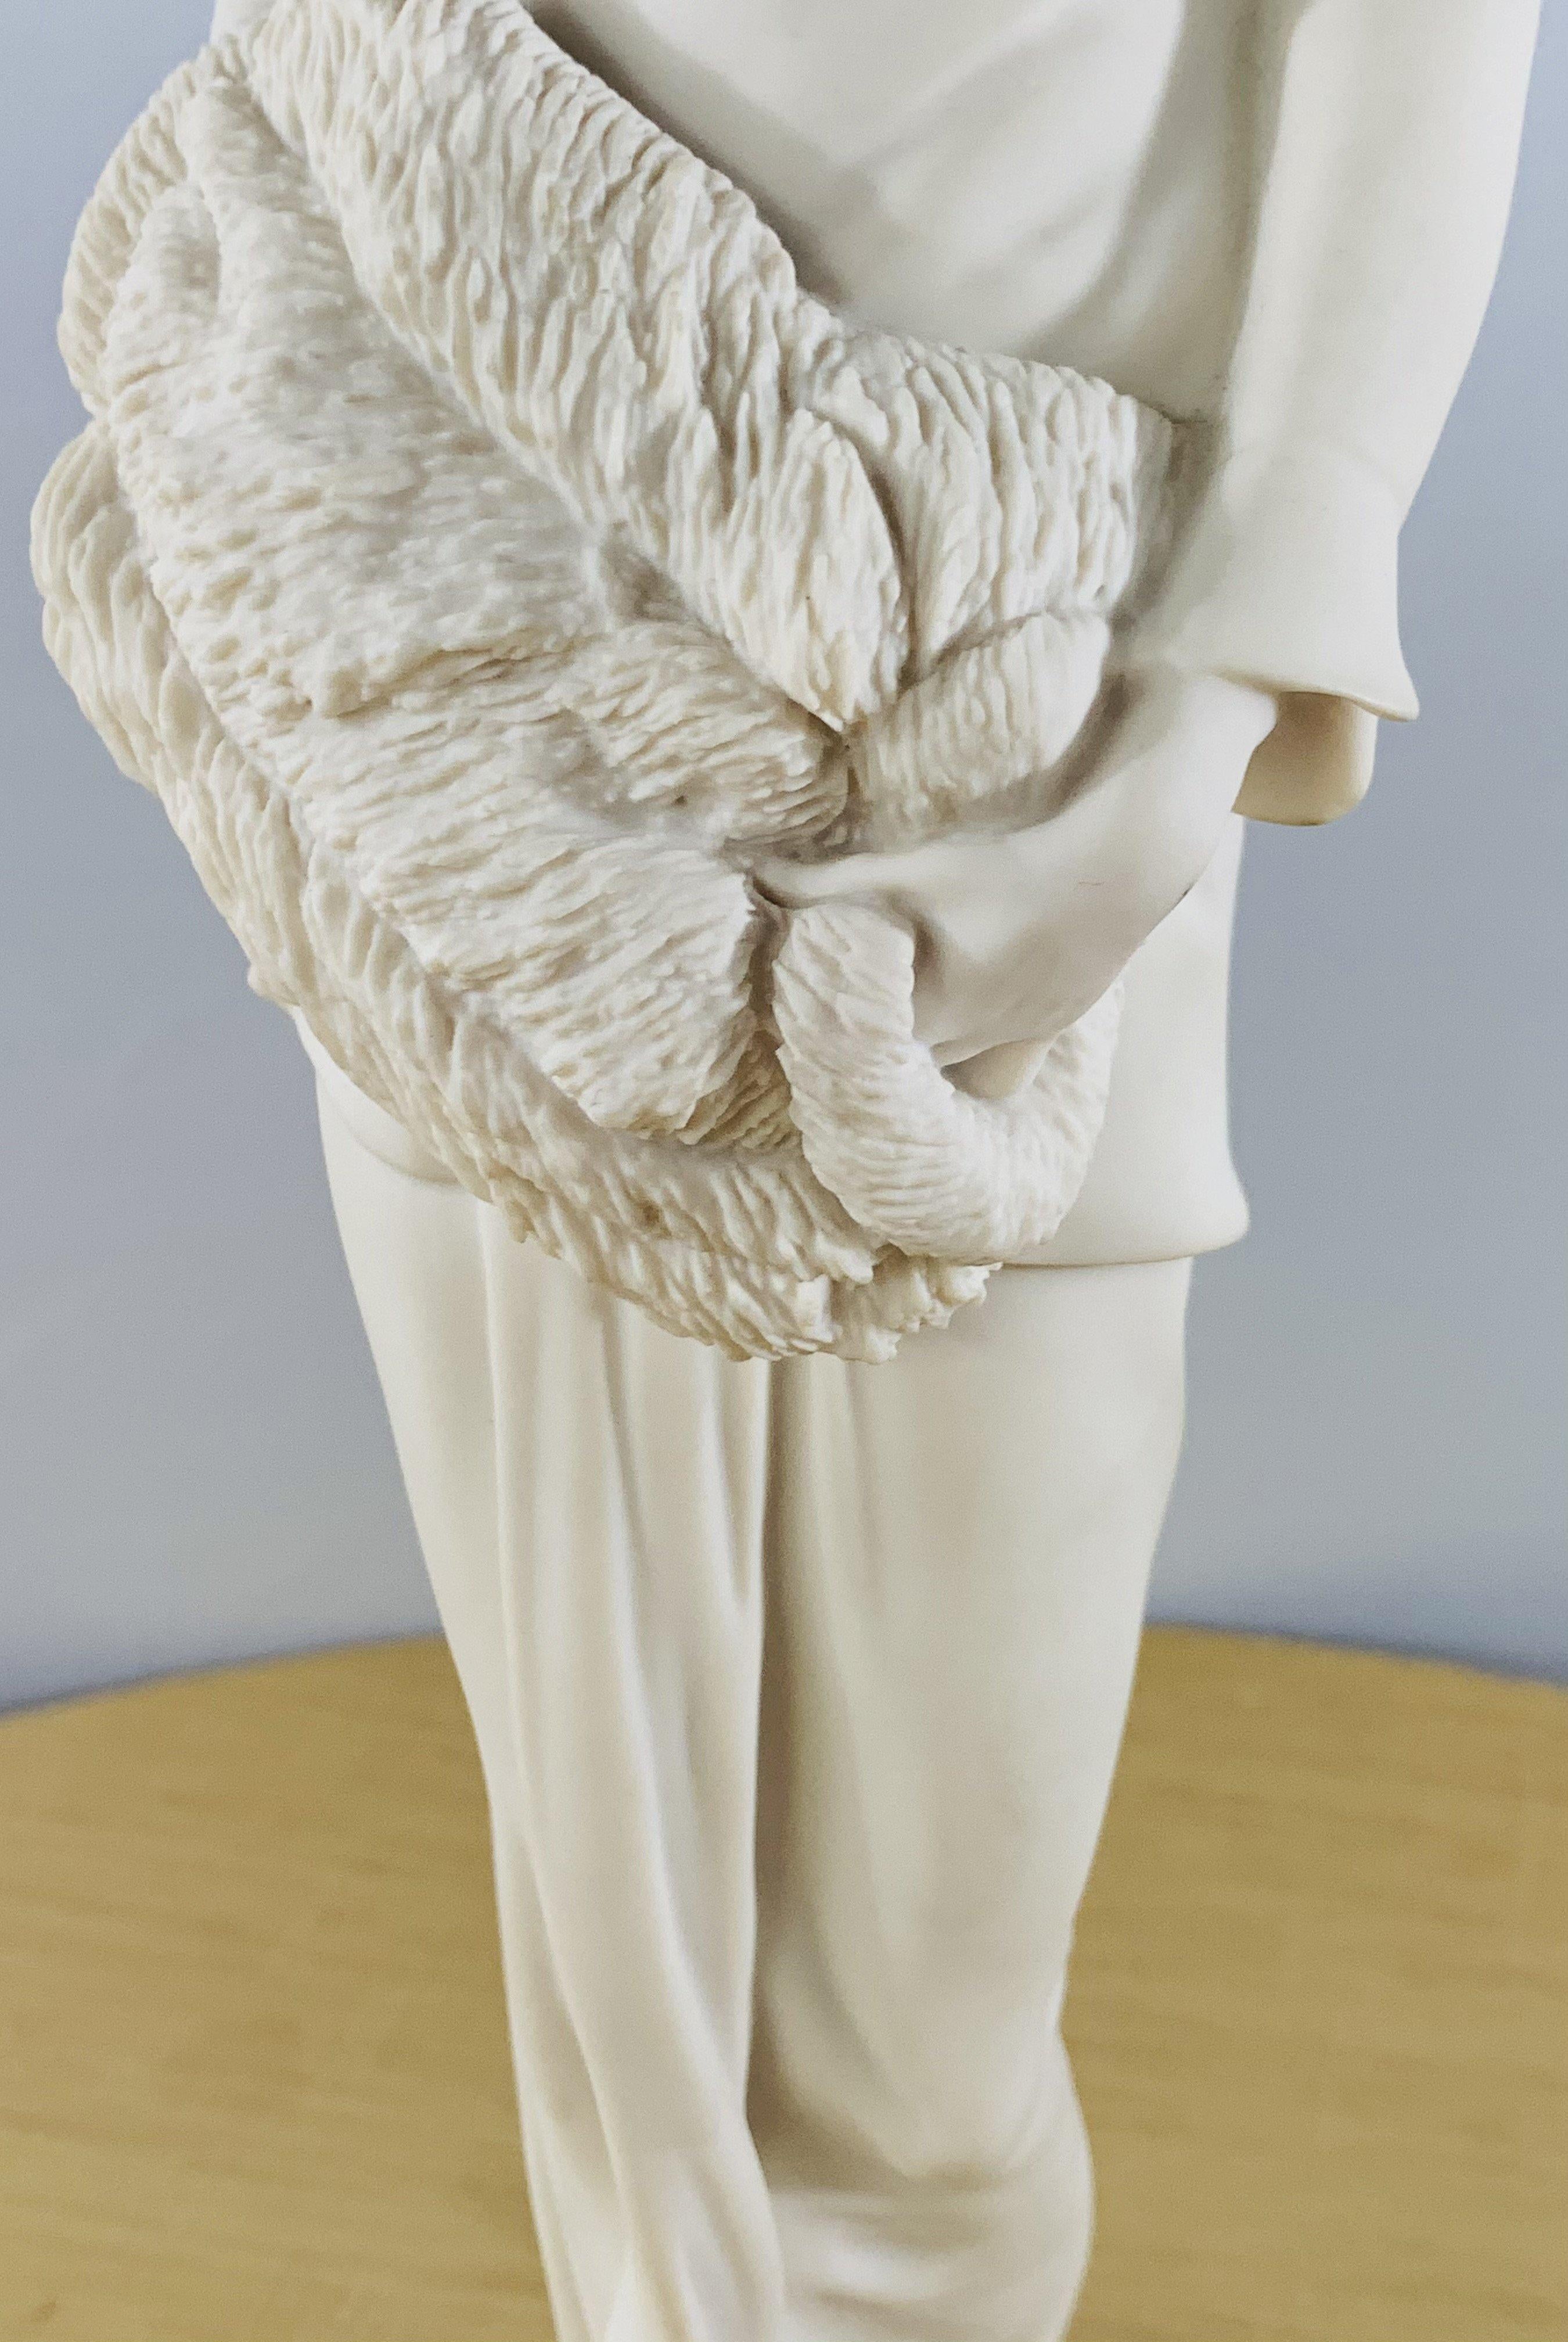 Giuseppe Armani Lady Porcelain Figurine For Sale 1